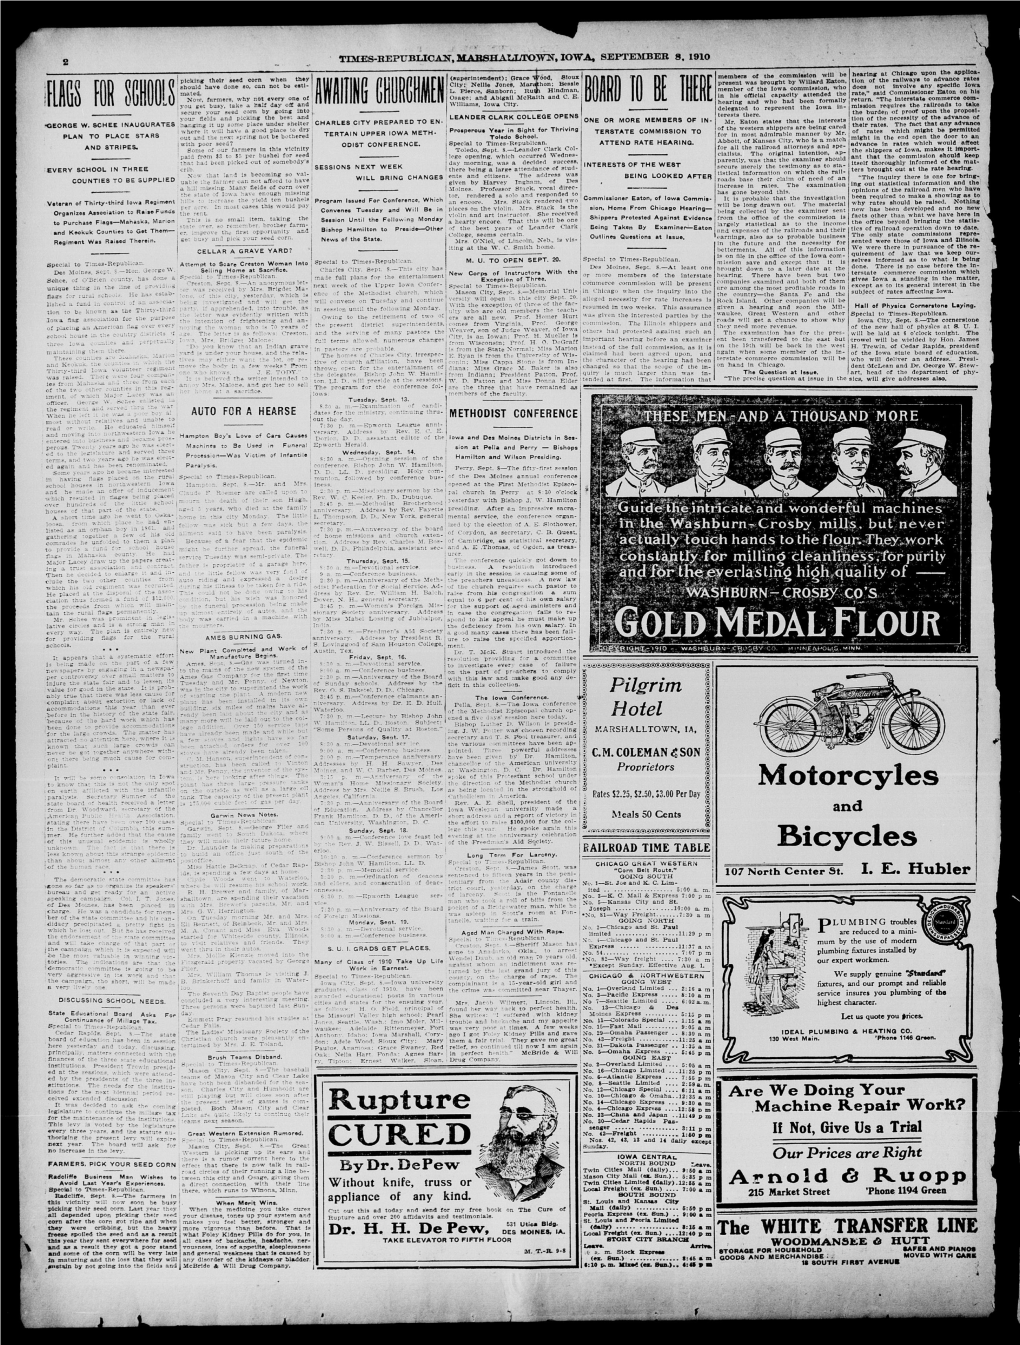 Evening Times-Republican (Marshalltown, Iowa). 1910-09-08